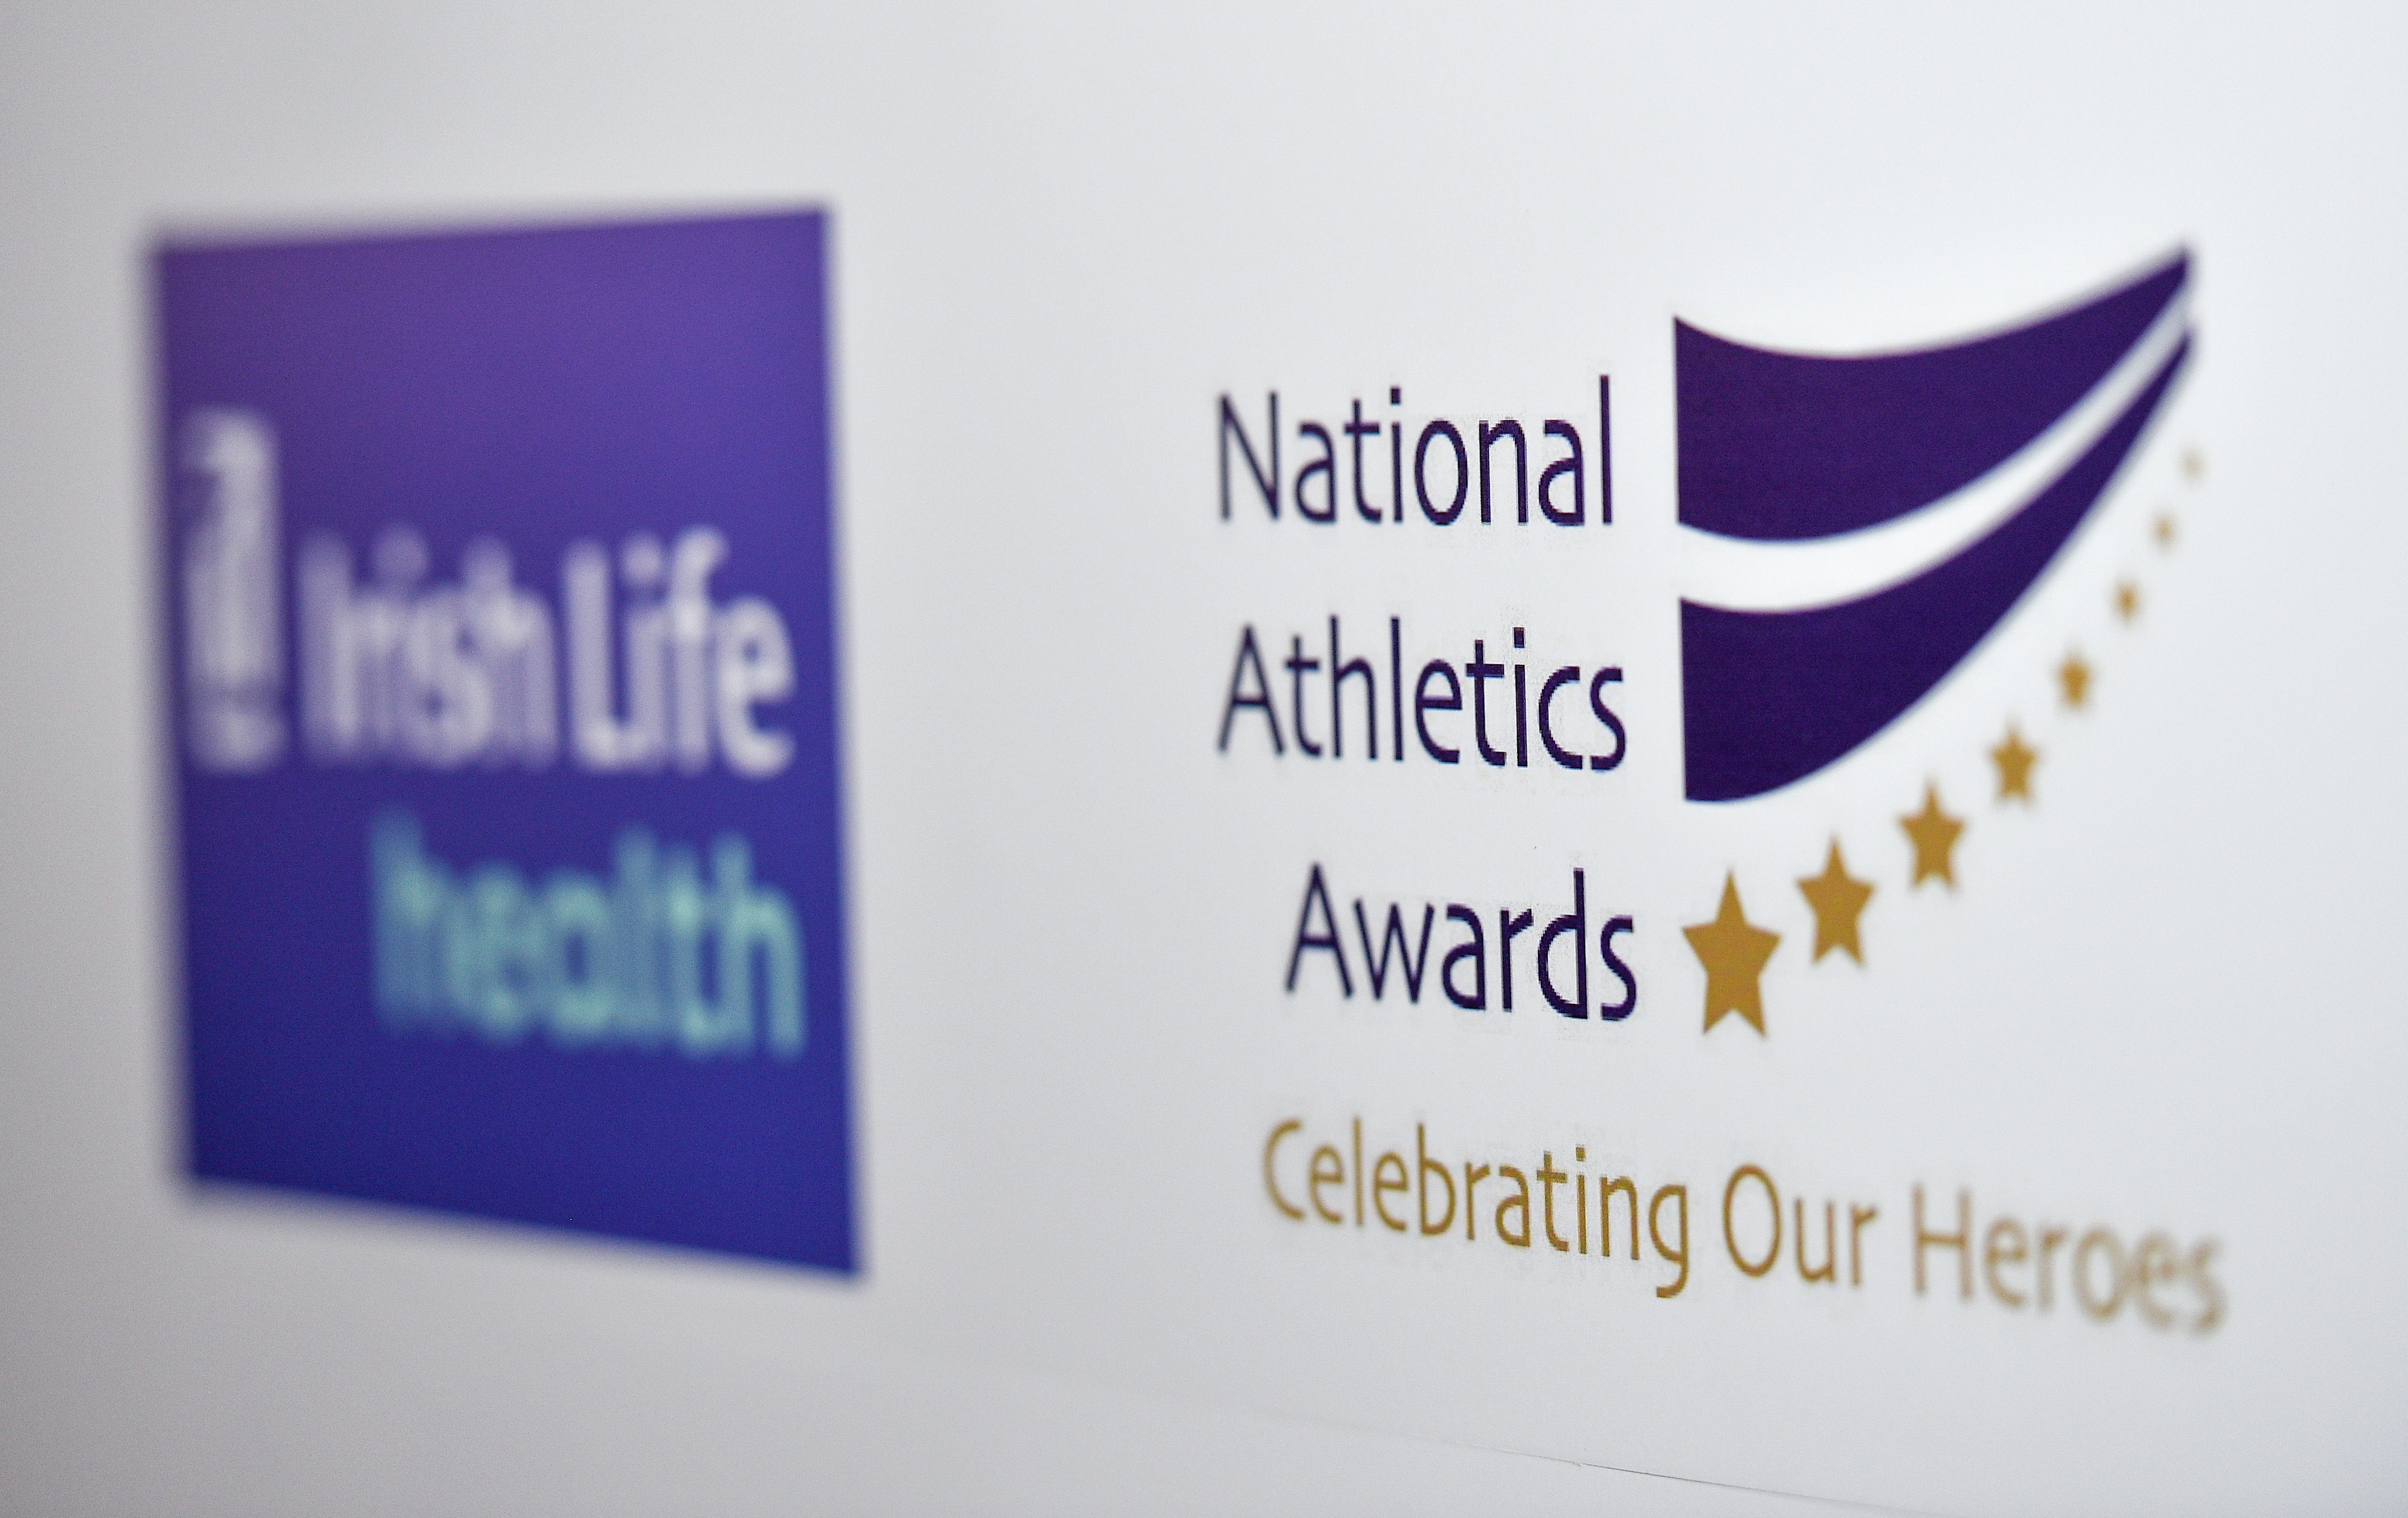 The Irish Life Health National Athletic Awards 2019